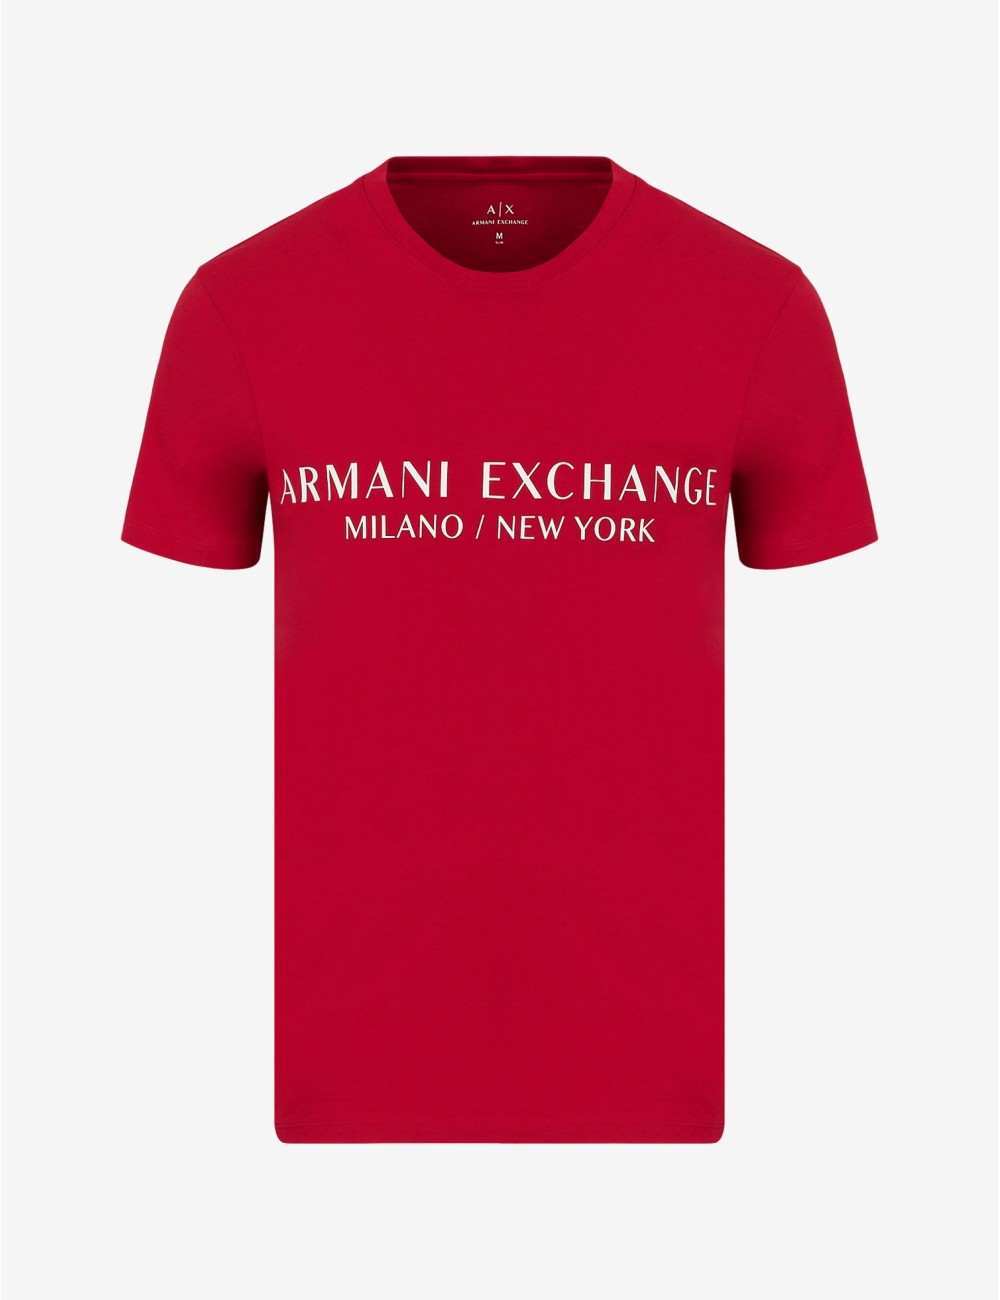 ARMANI EXCHANGE RED MEN'S...